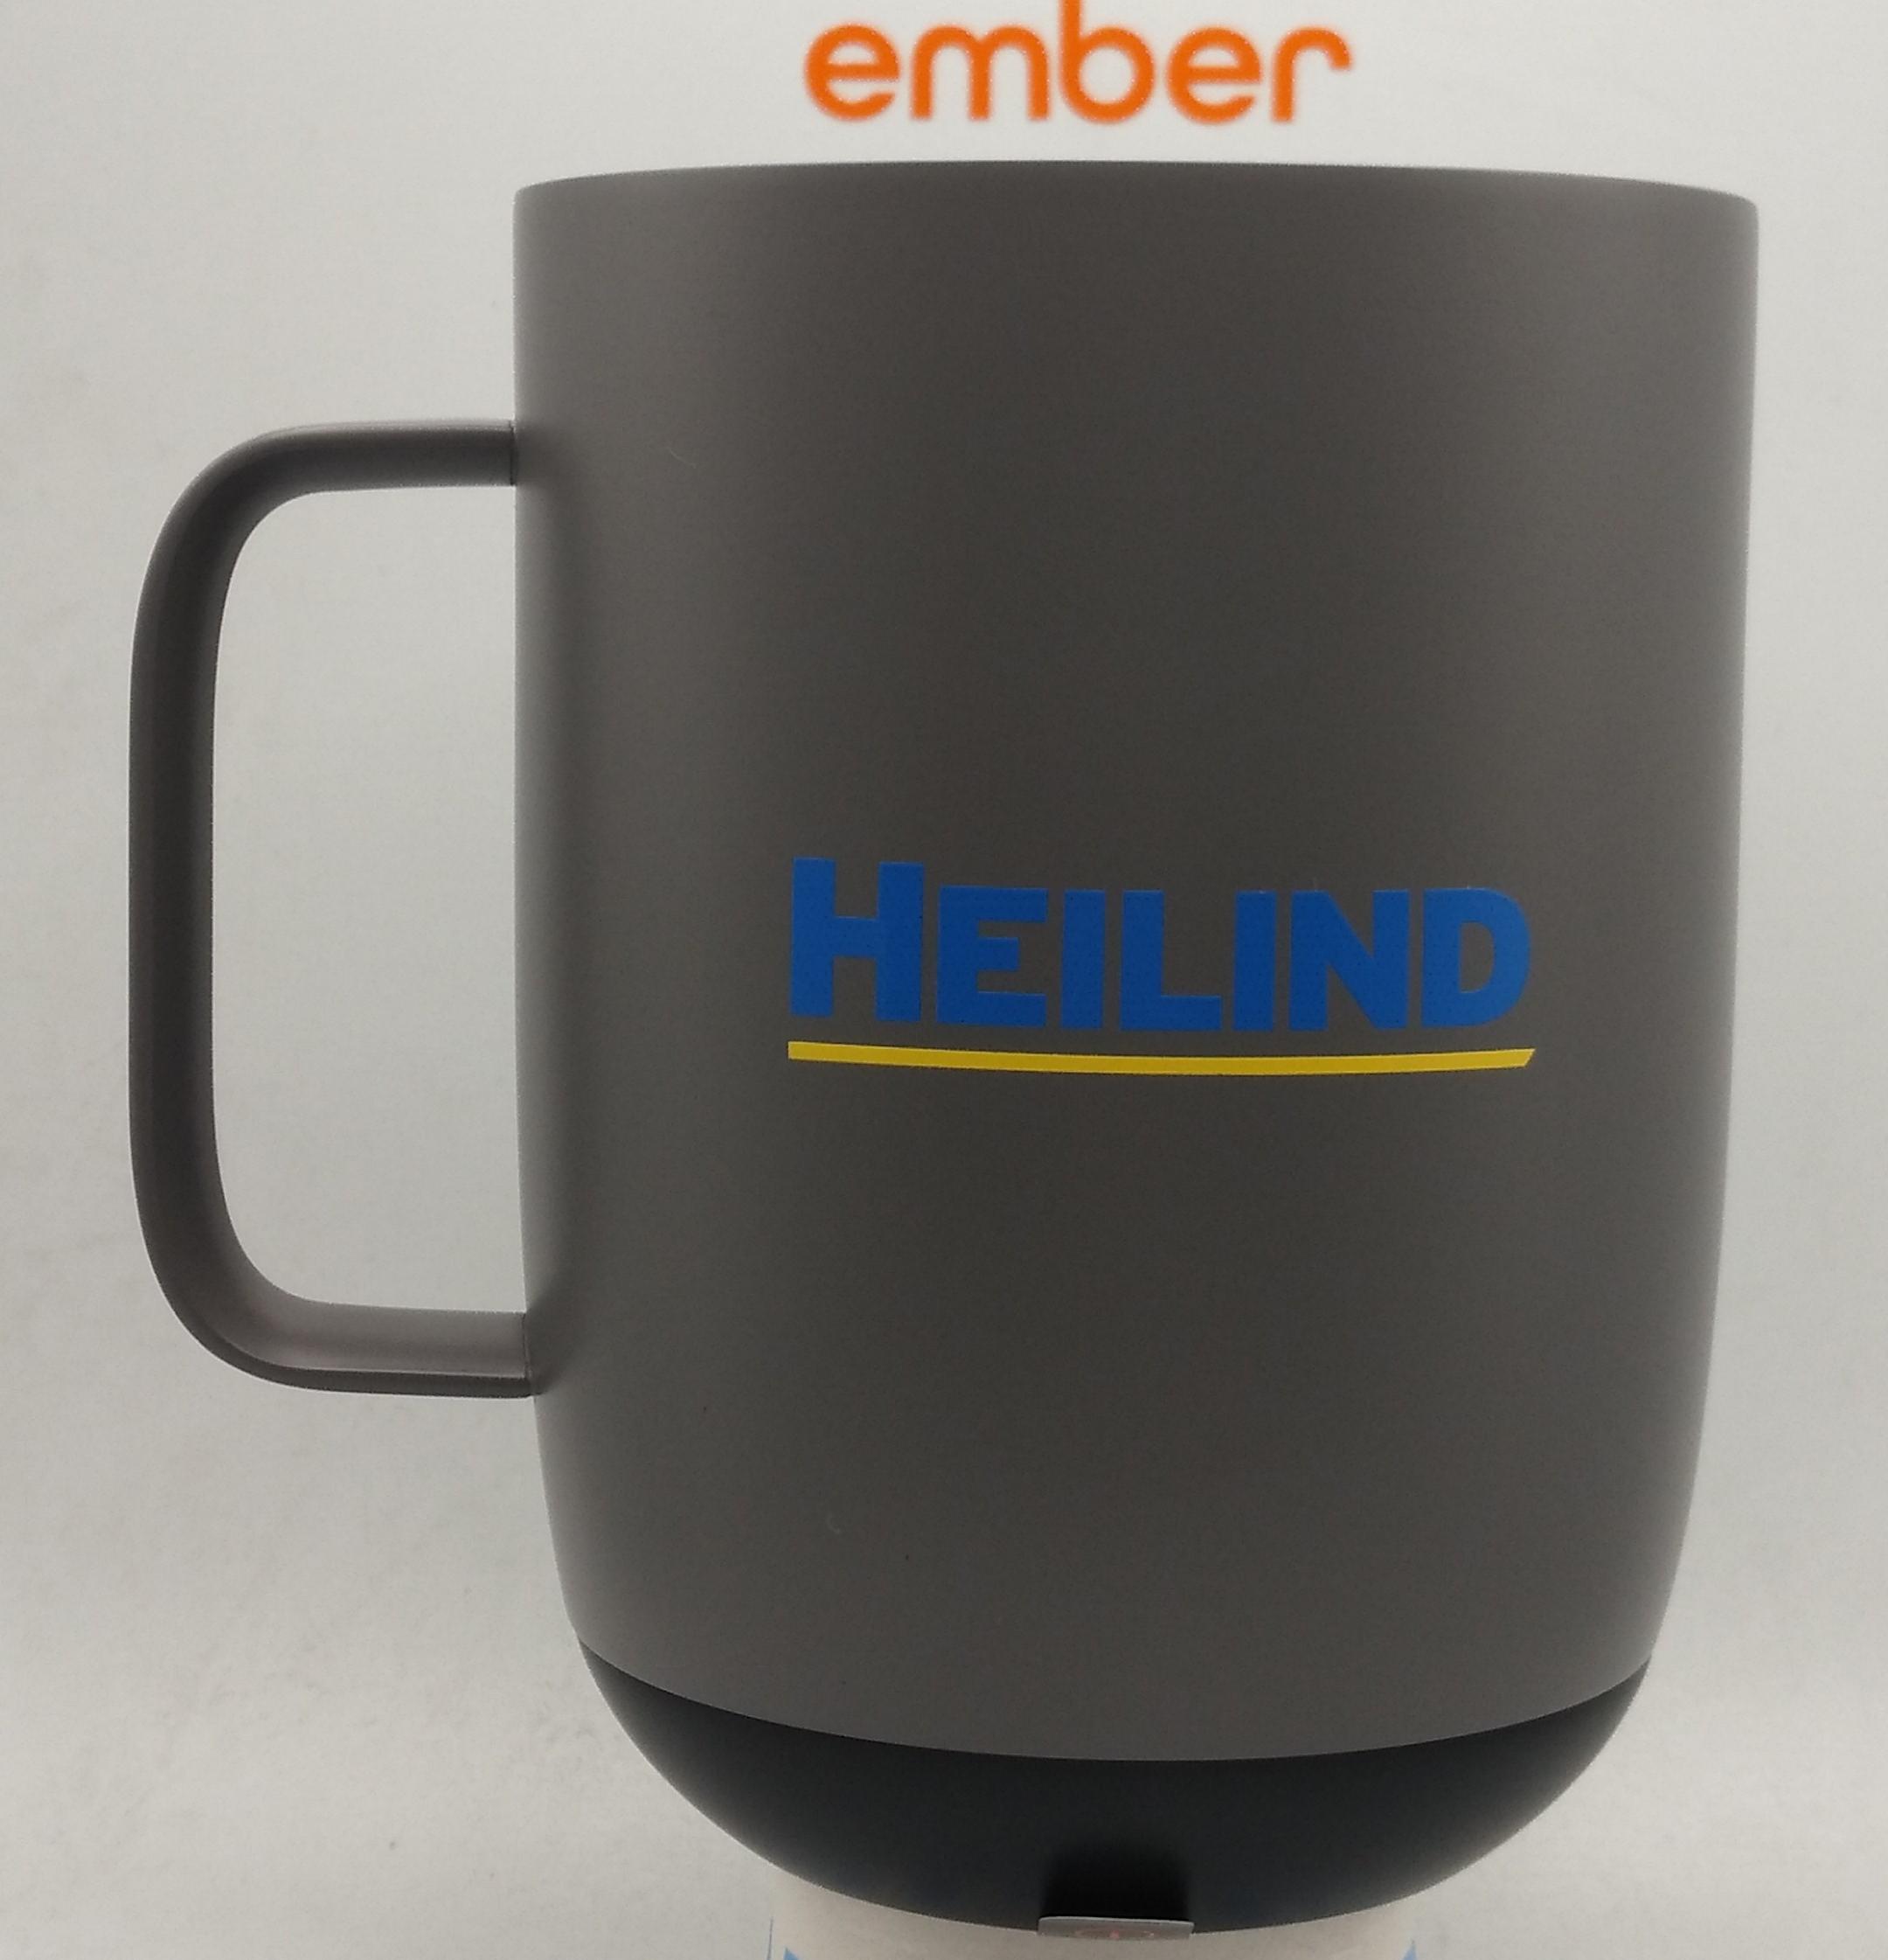 14 oz. Ember Mug second generation custom printed with logo